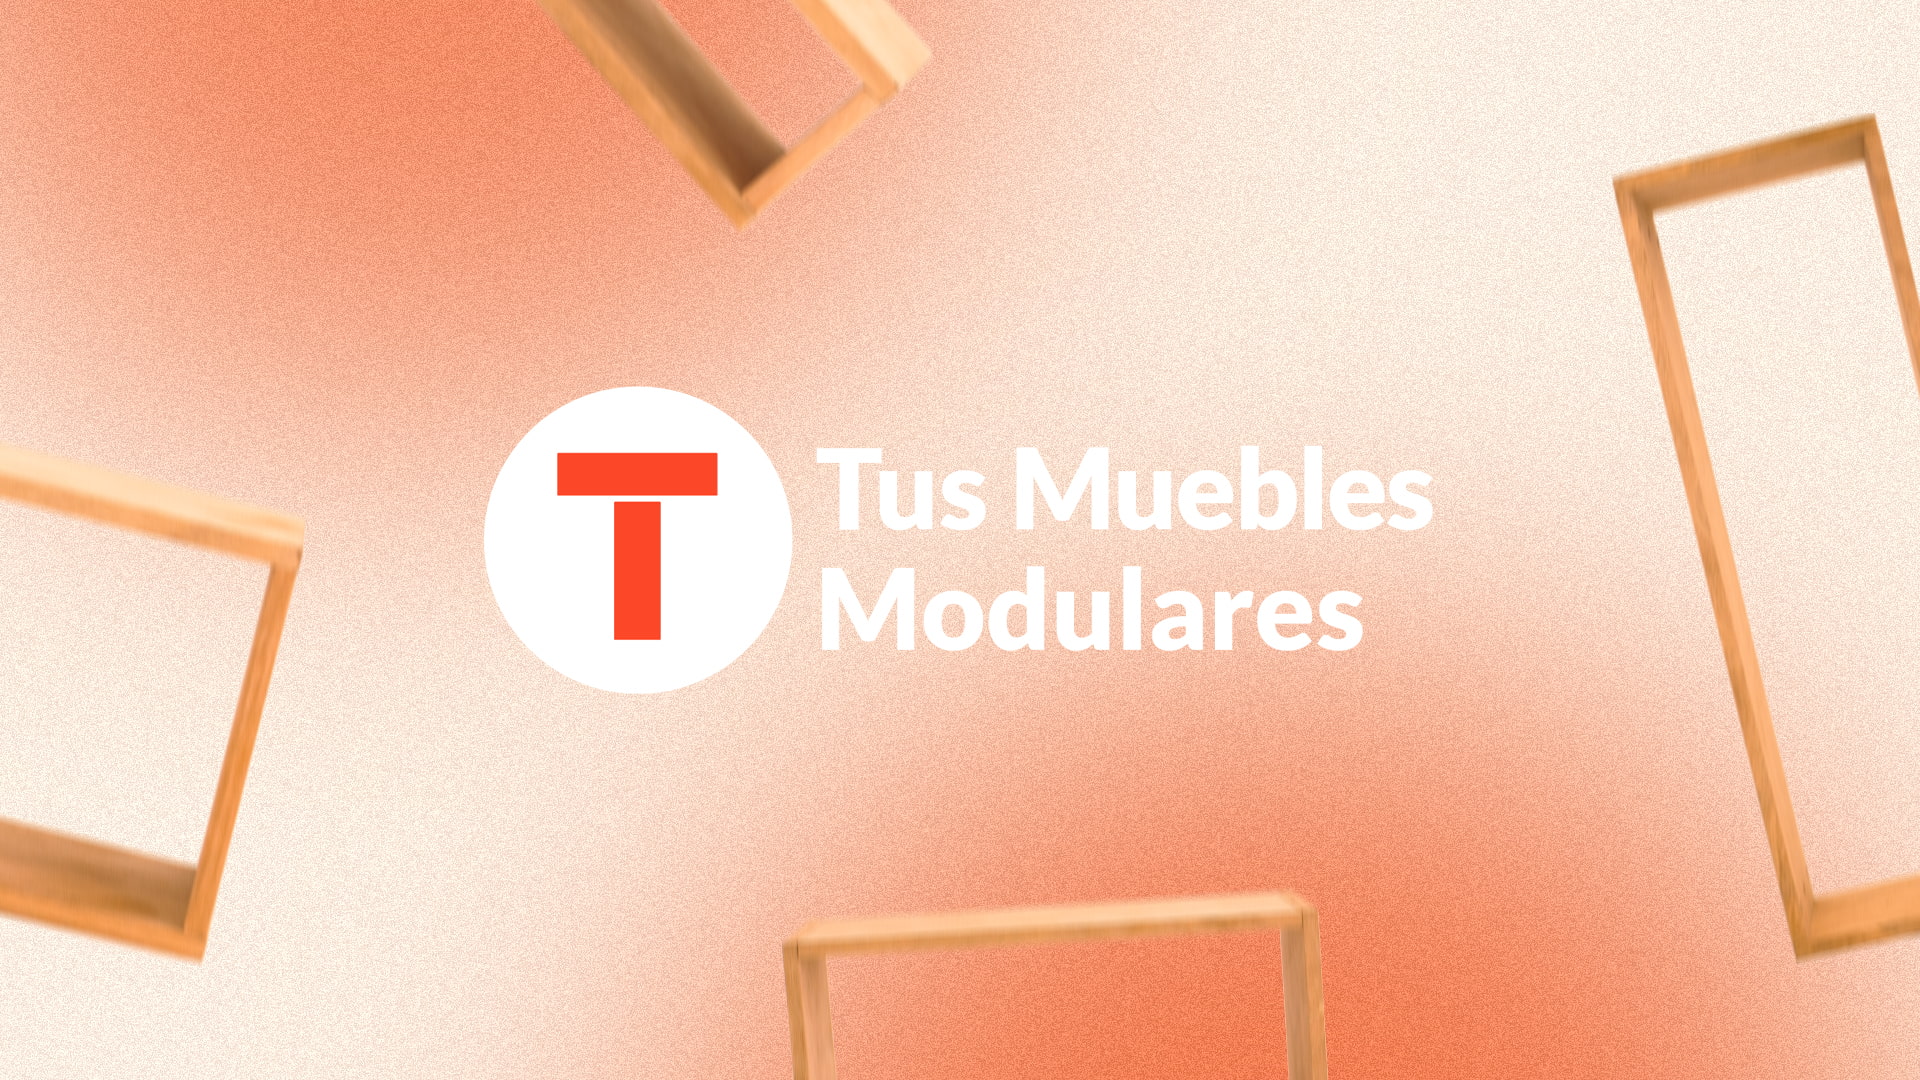 tus-muebles-modulares-redes-socialesmonterrey-kiwiids-10